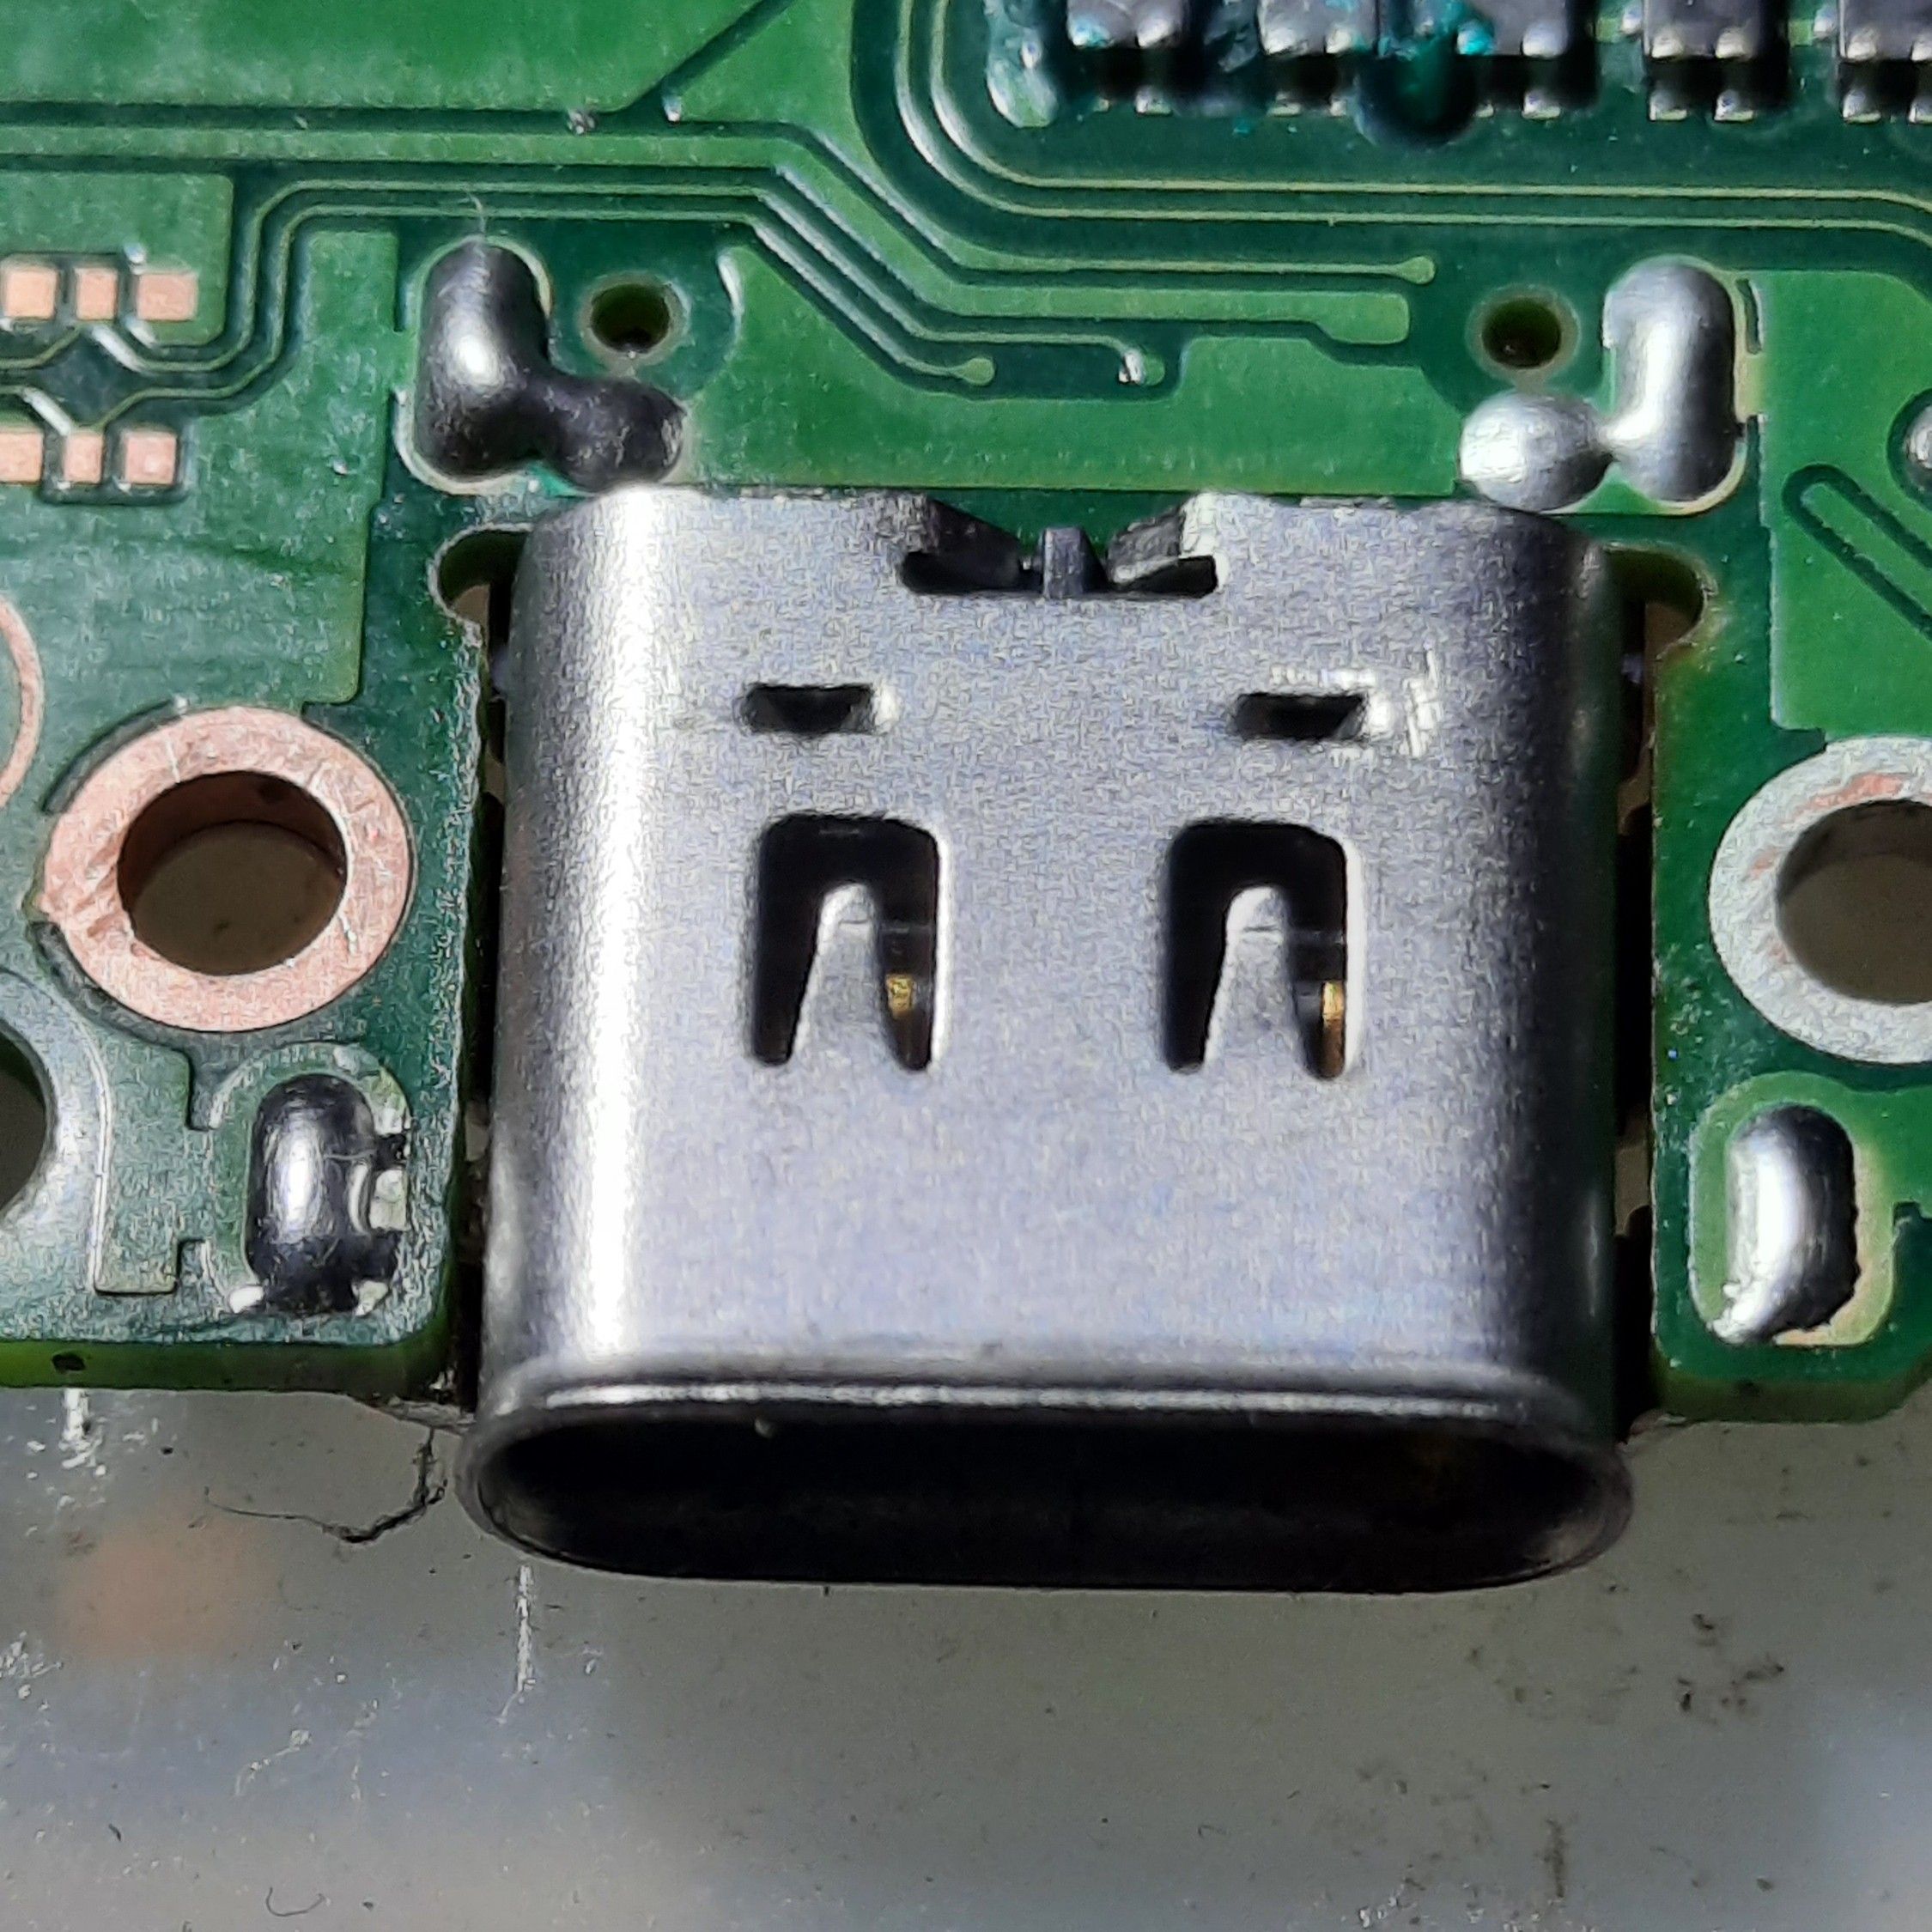 Nintendo Switch USB-C Charge Port Replacement portfolio